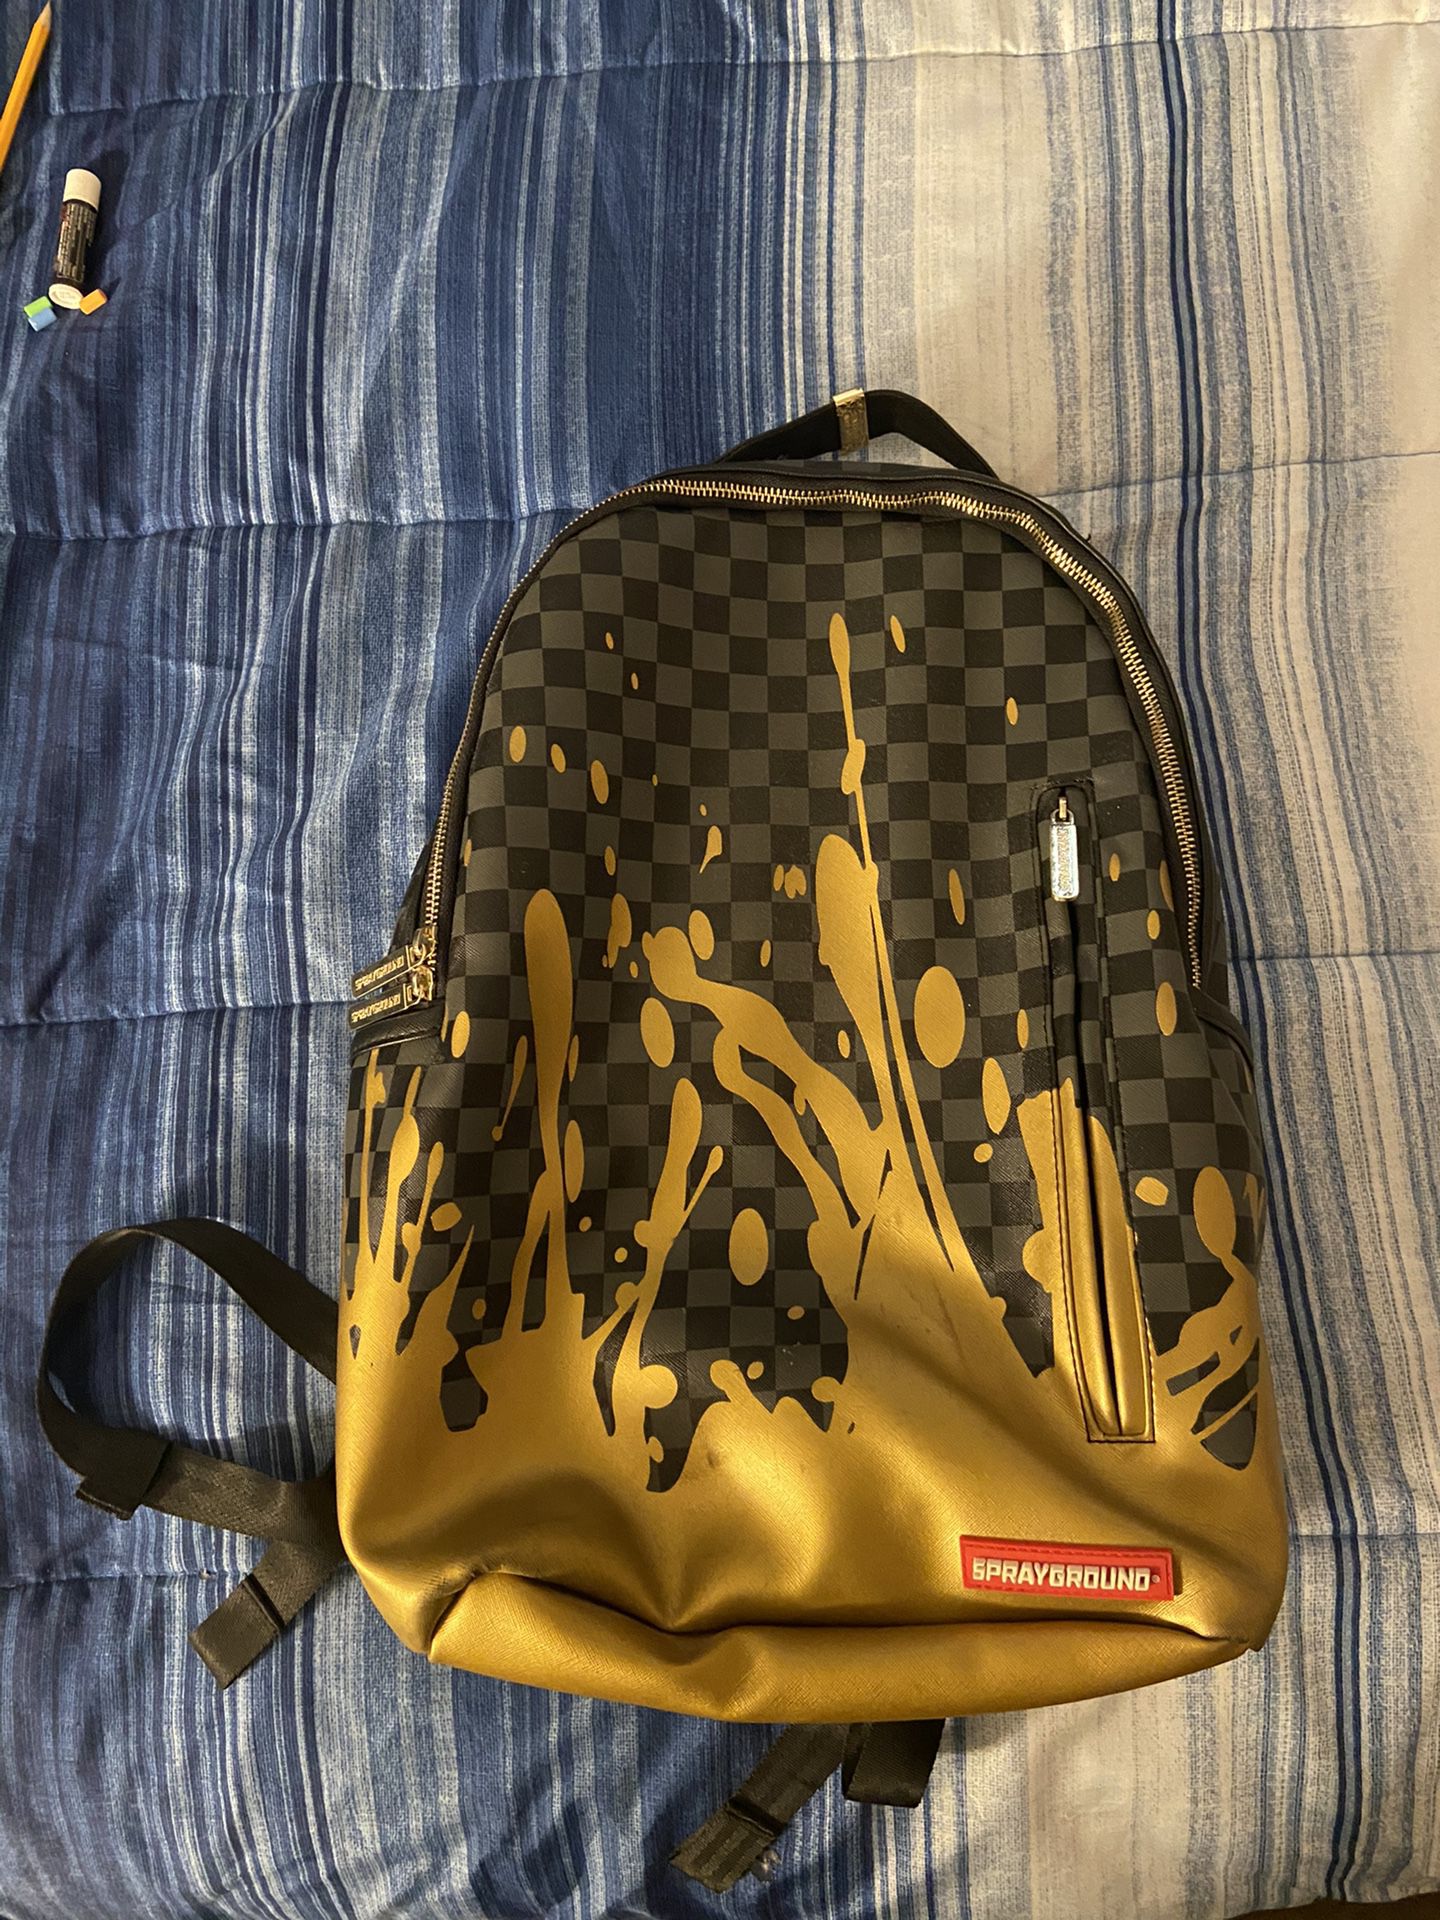 Authentic Sprayground Backpack